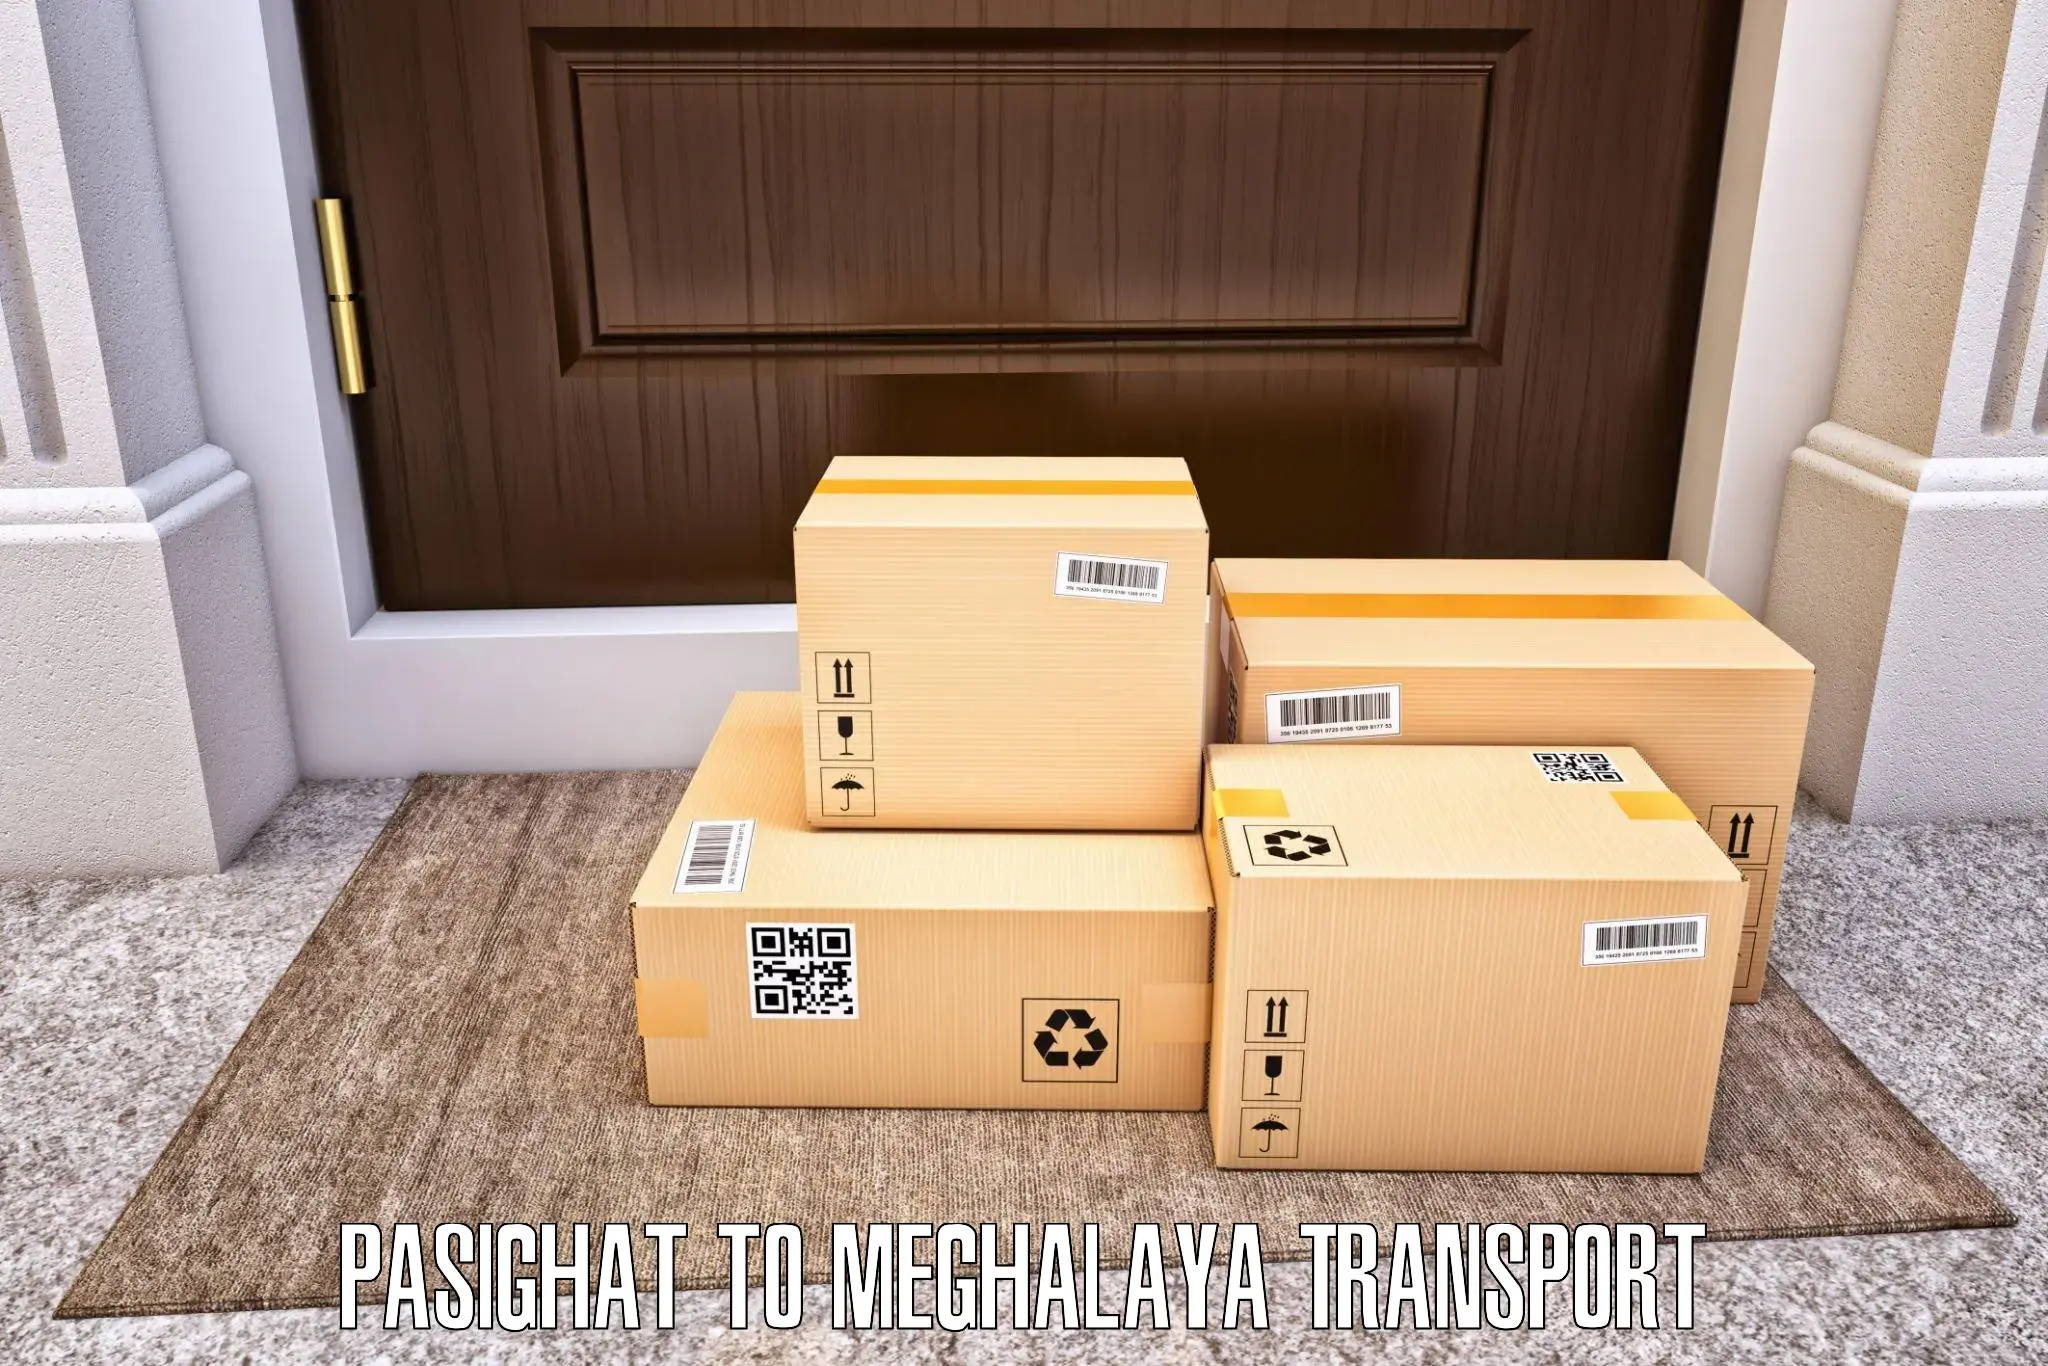 Shipping partner Pasighat to Jowai